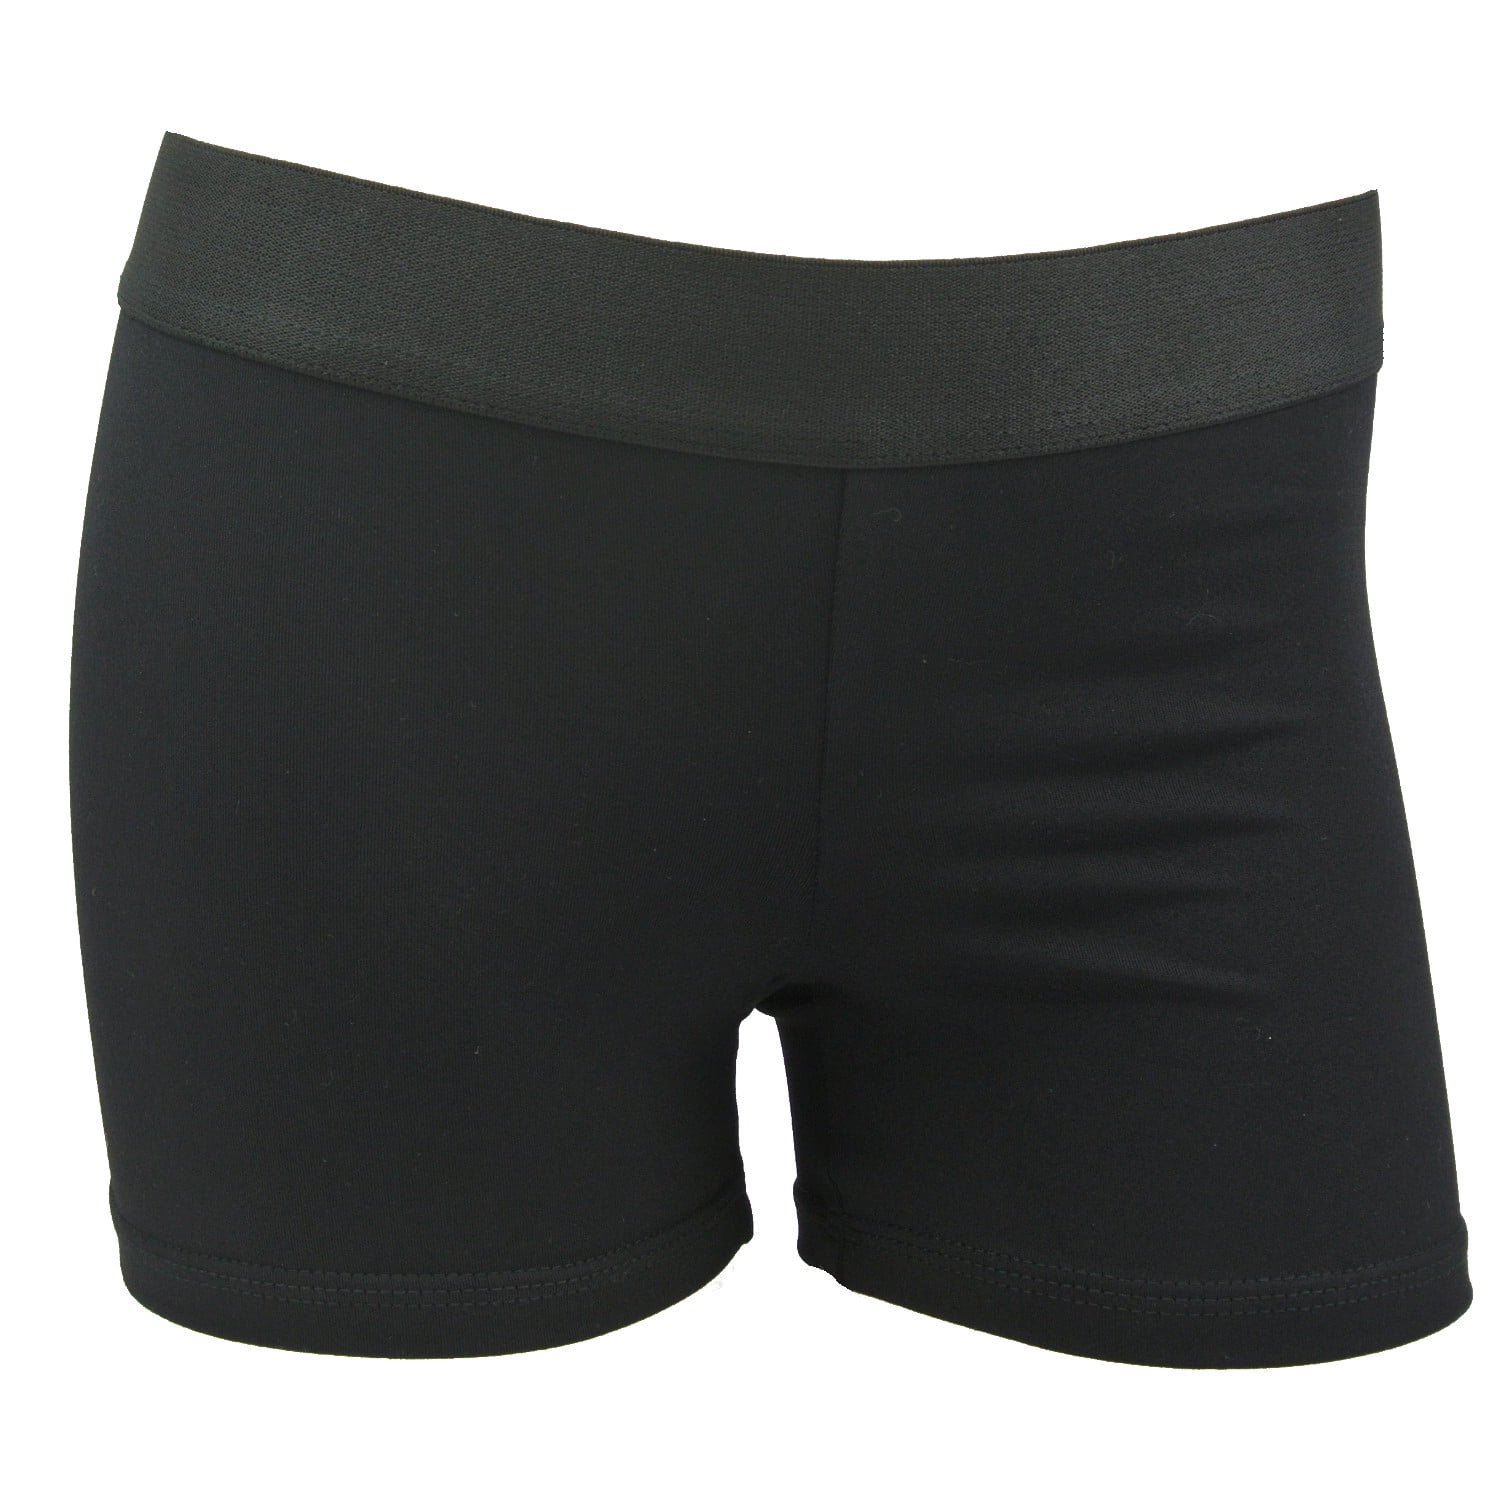 anthony santacruz recommends spandex shorts at walmart pic